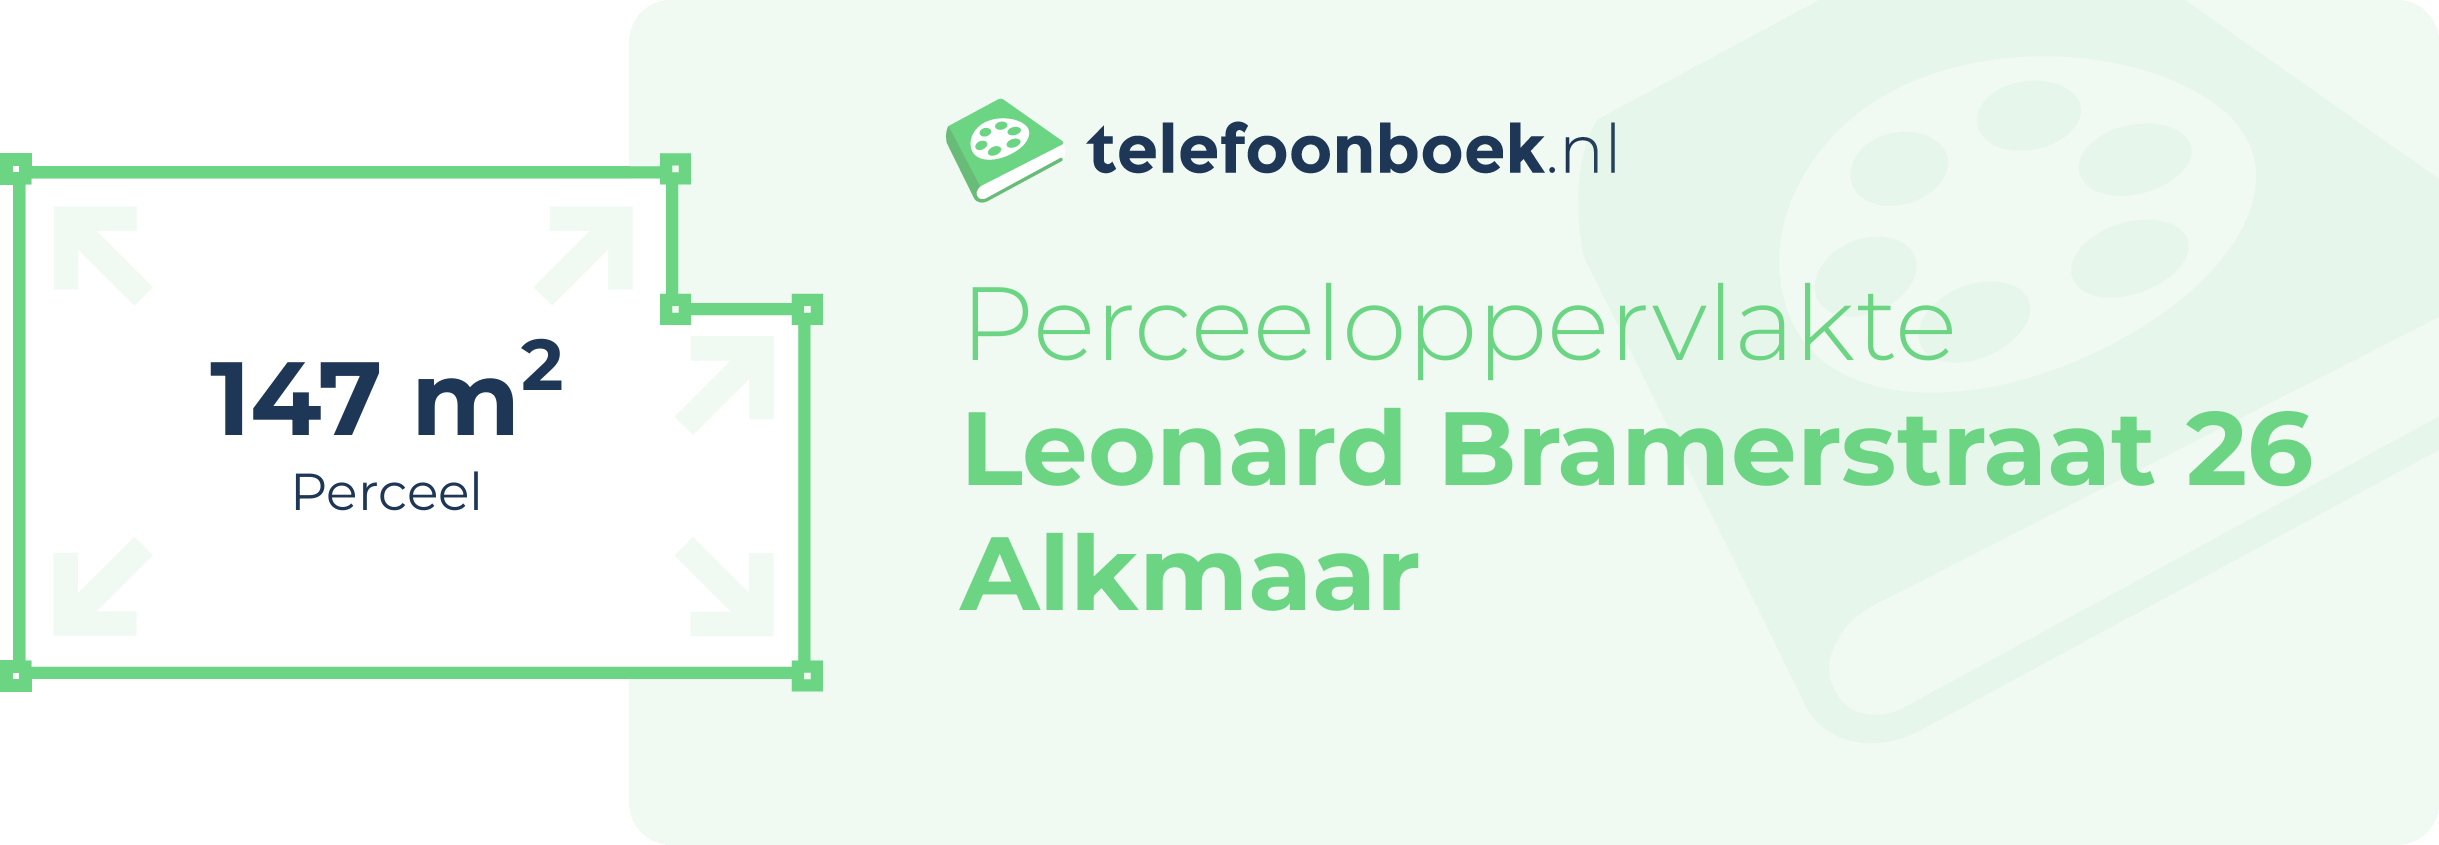 Perceeloppervlakte Leonard Bramerstraat 26 Alkmaar